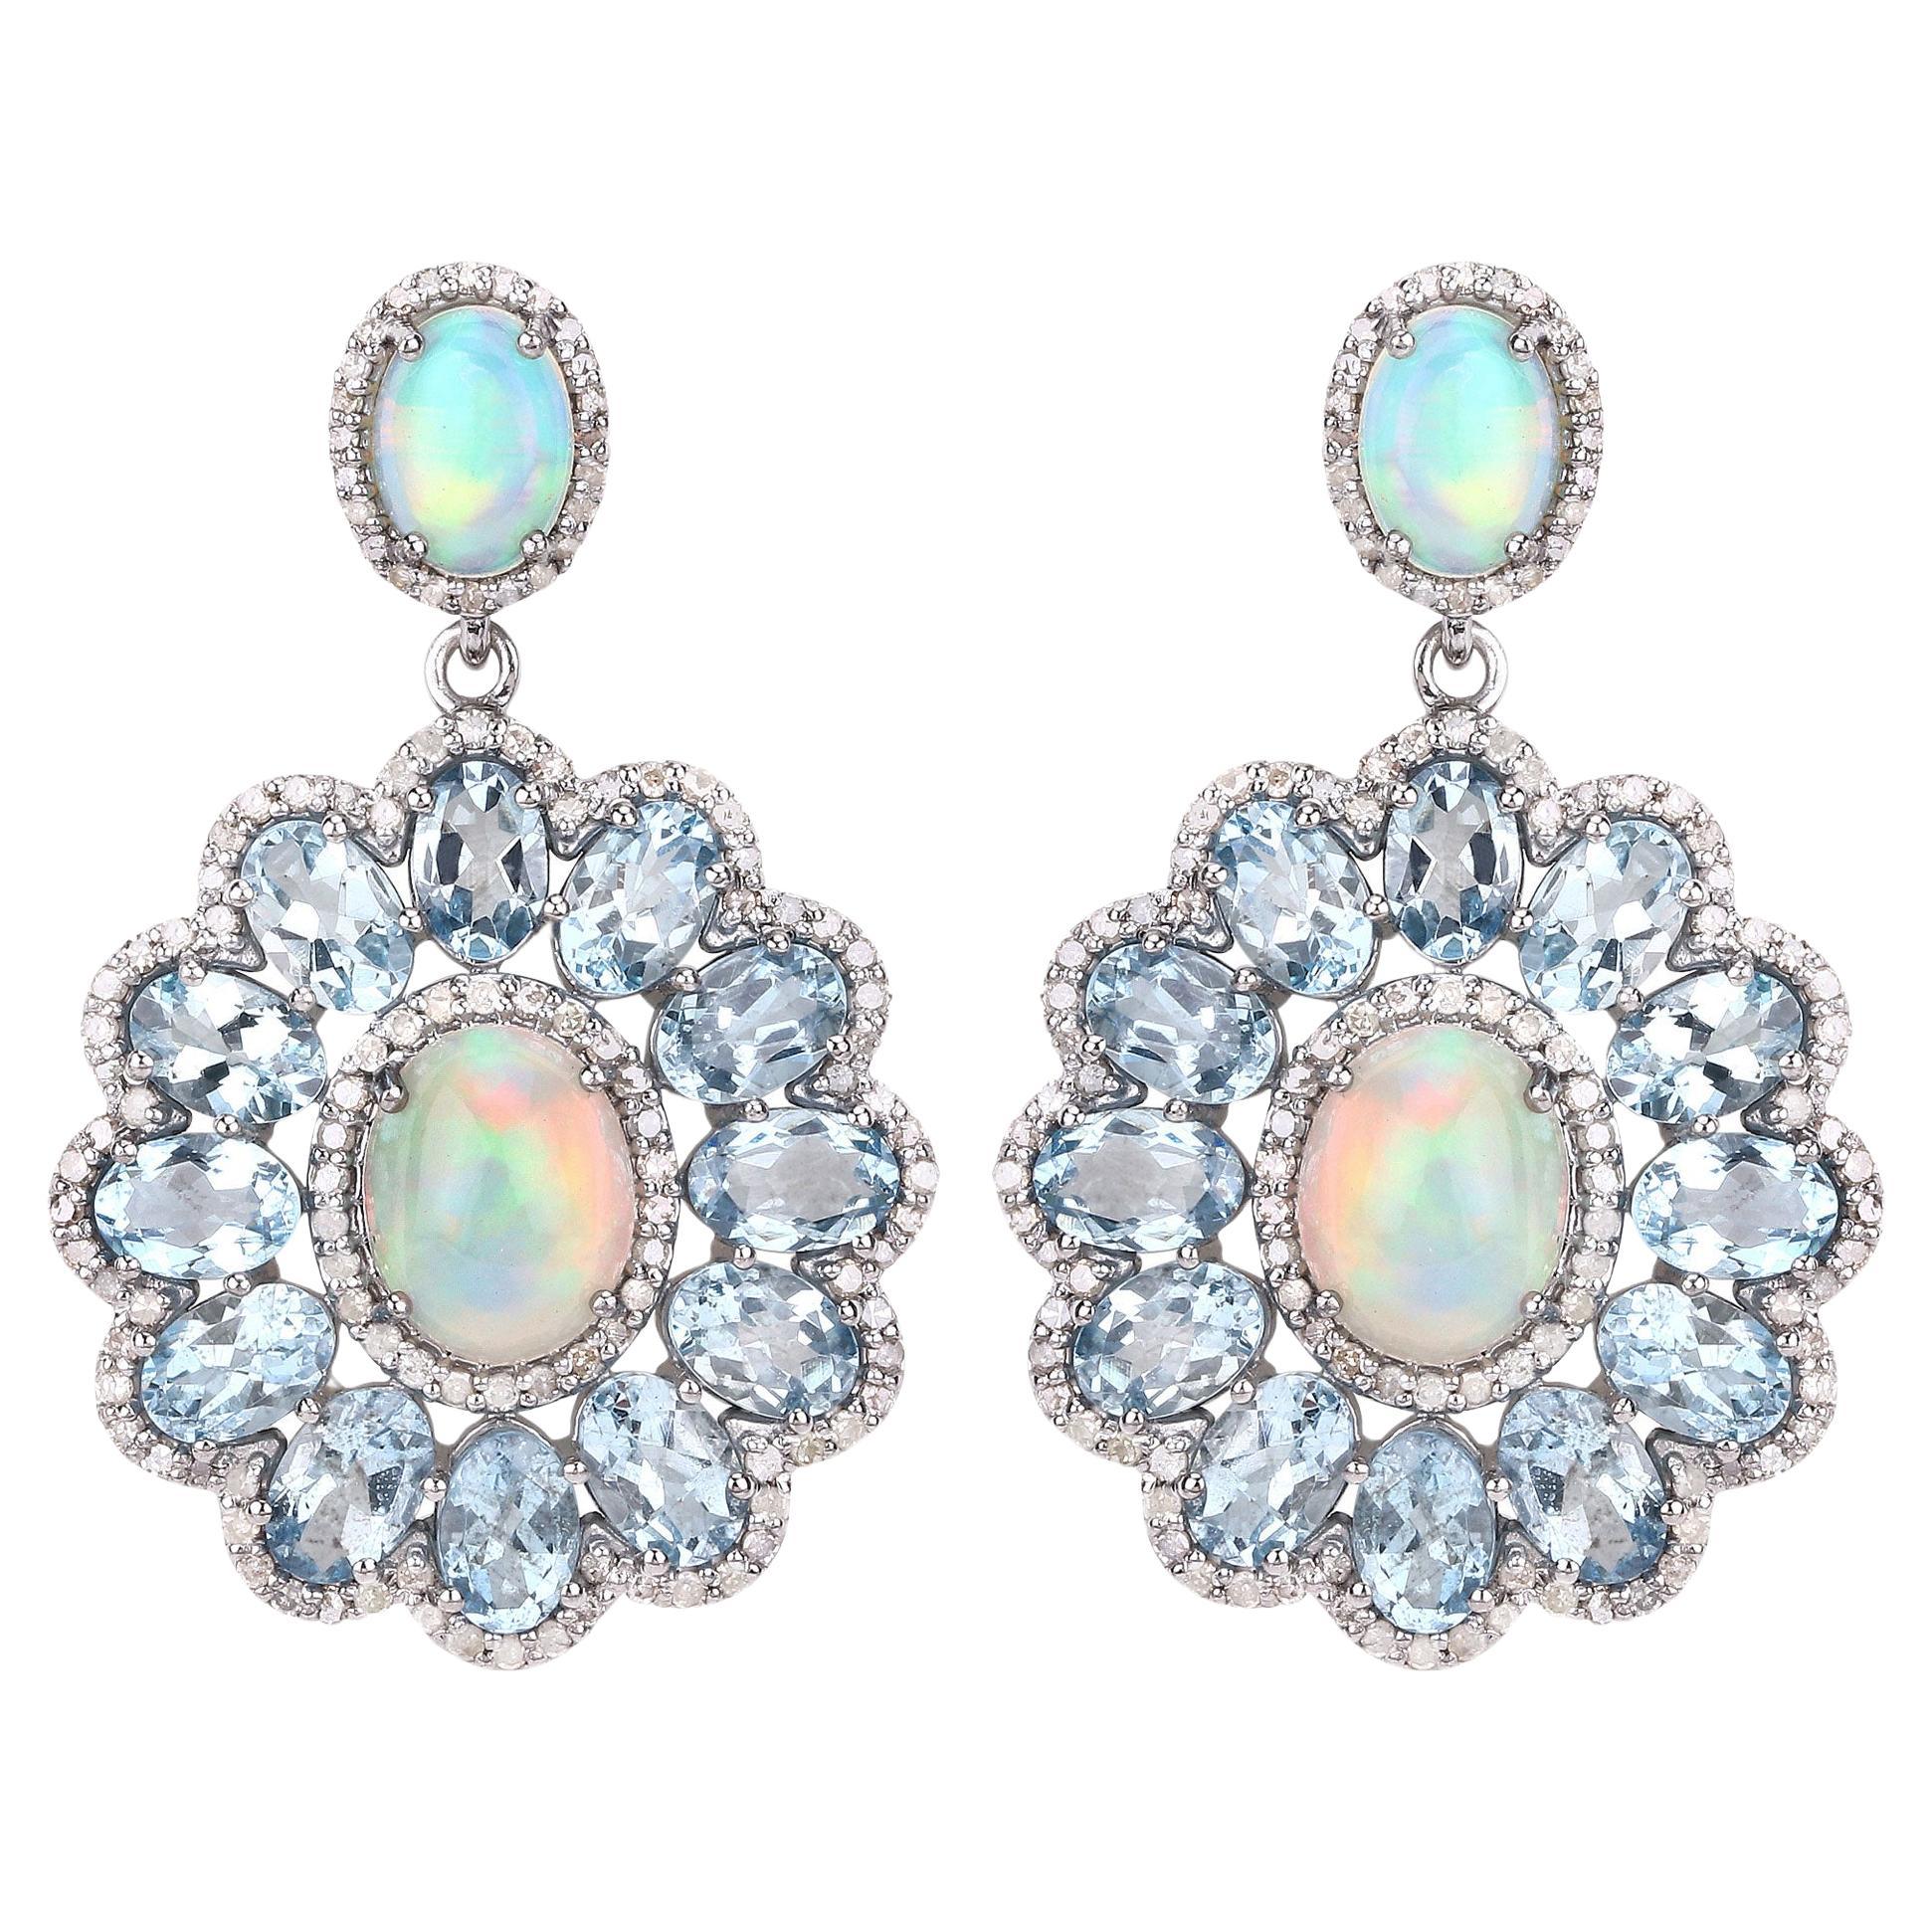 Aquamarine Opal Dangle Earrings Diamond Setting 16.27 Carats Total